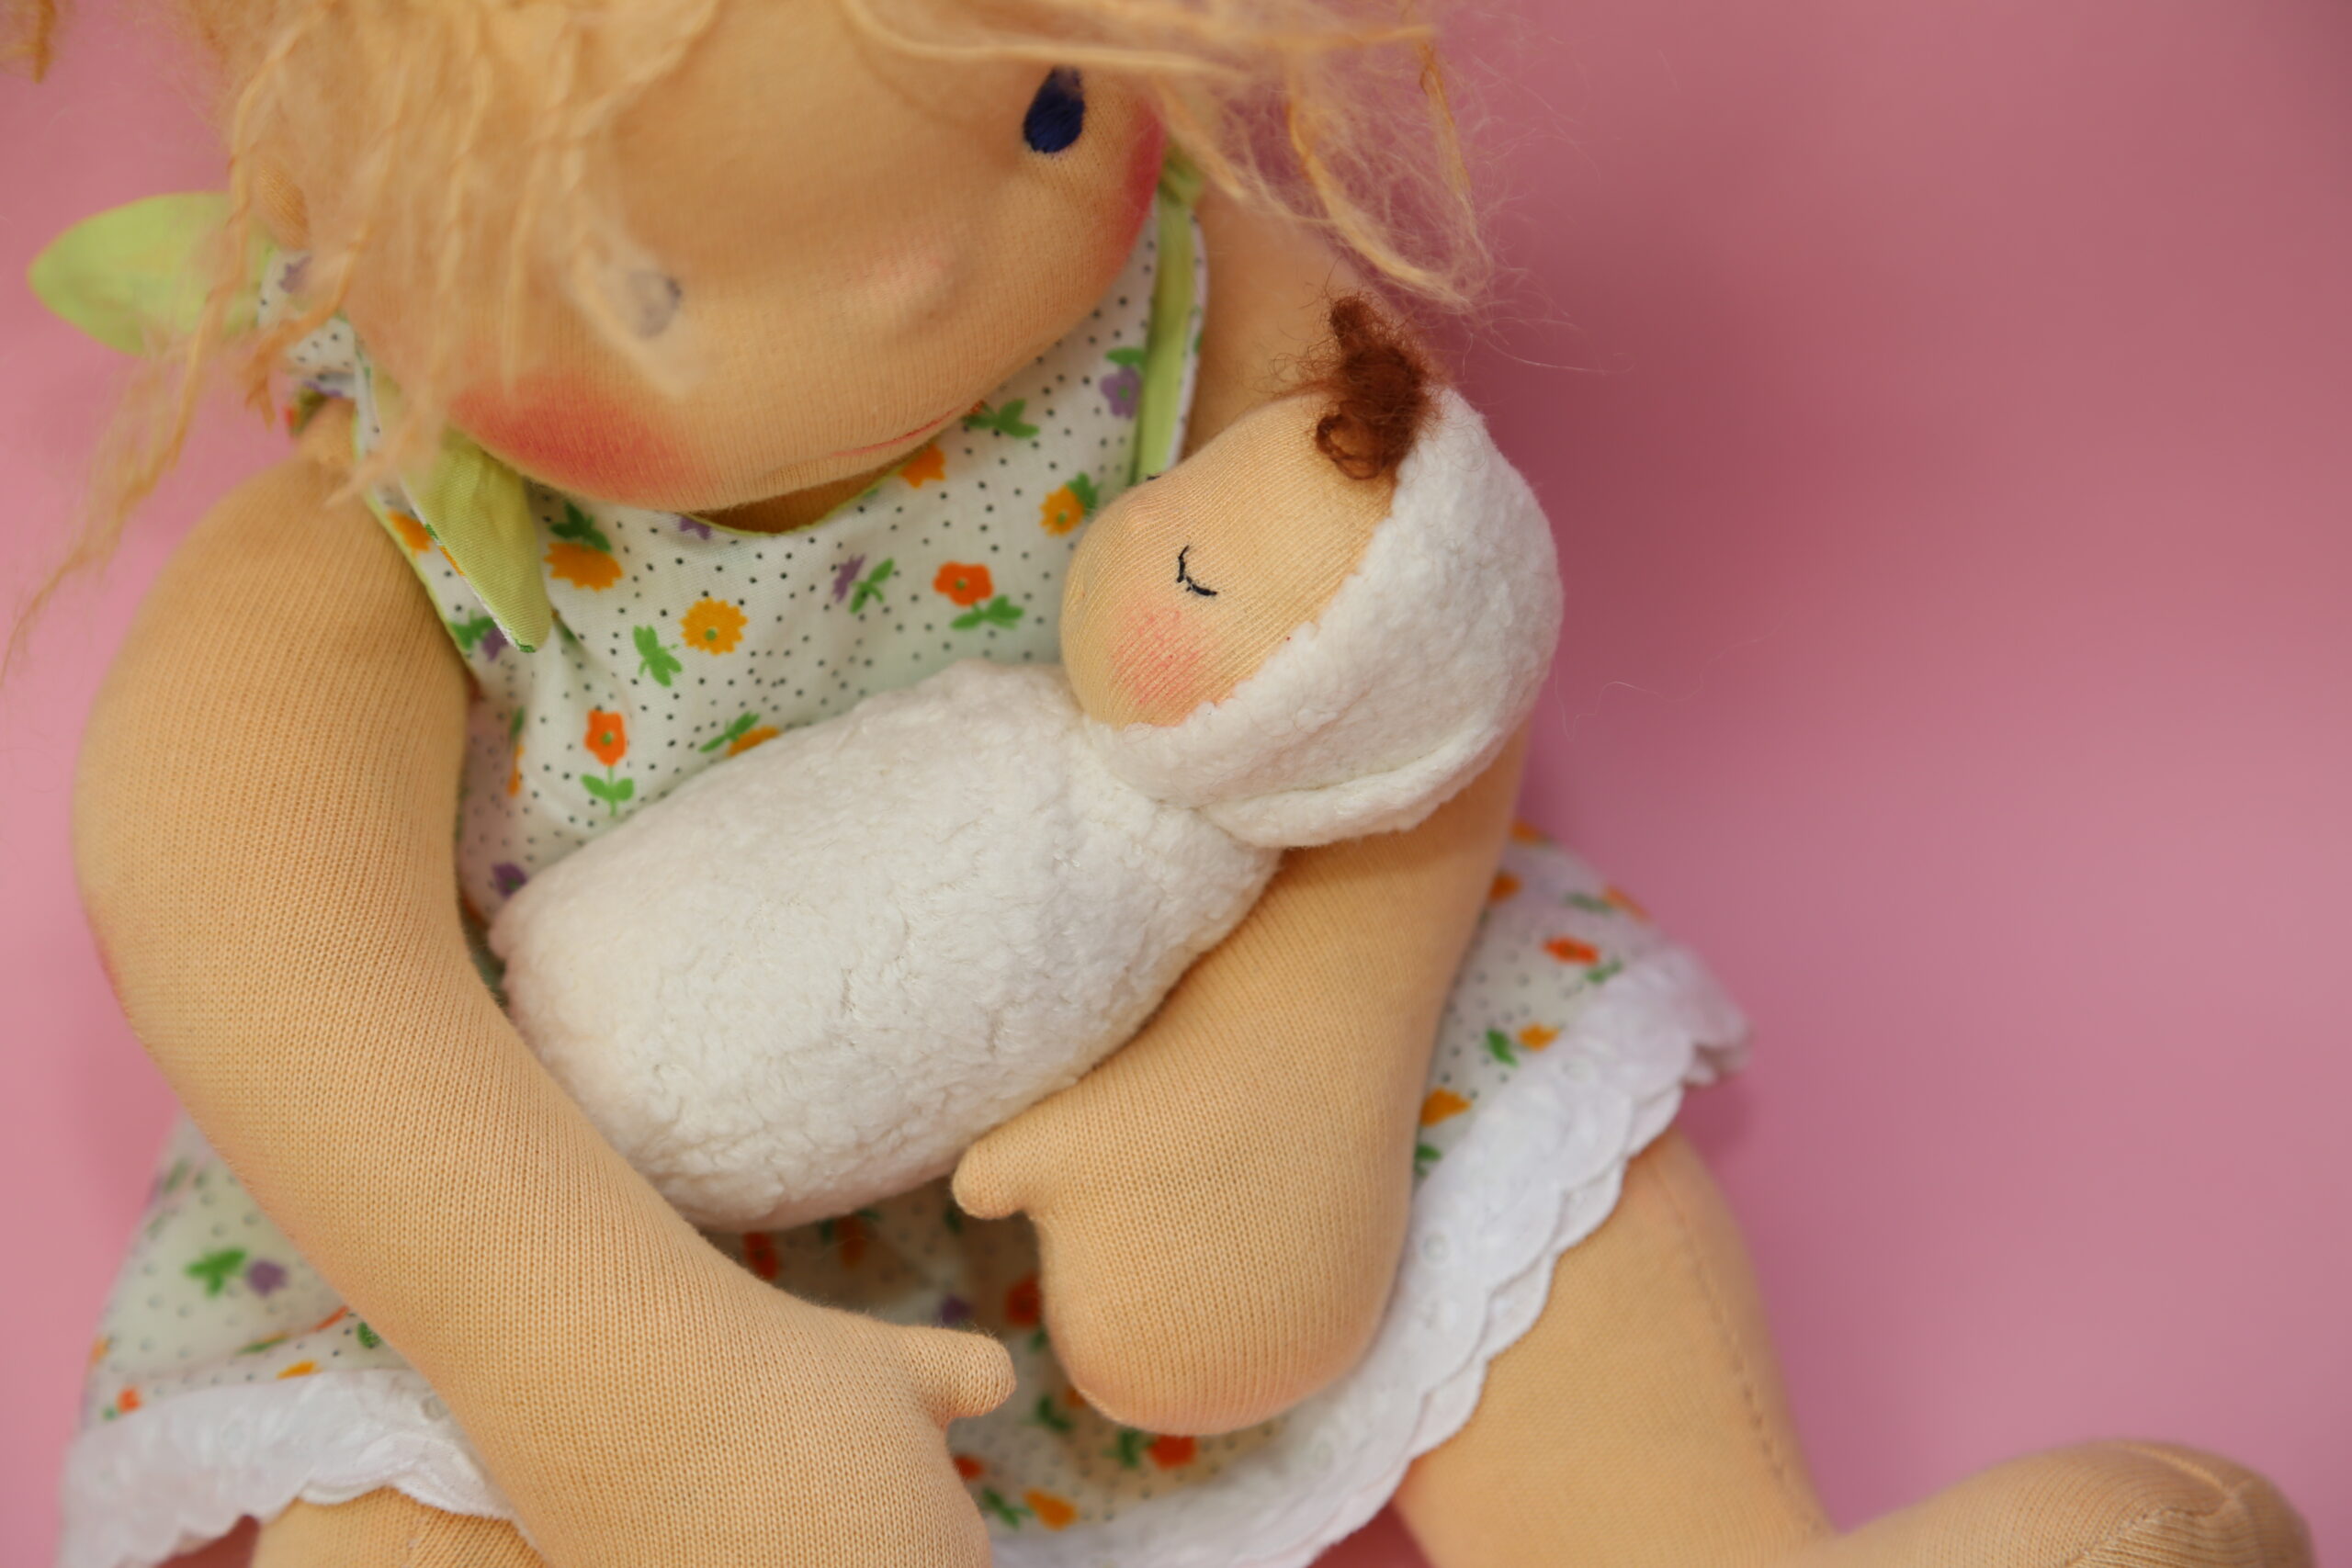 waldorfská panenka s malou panenkou v náručí, panenky s duší, ekopanenky